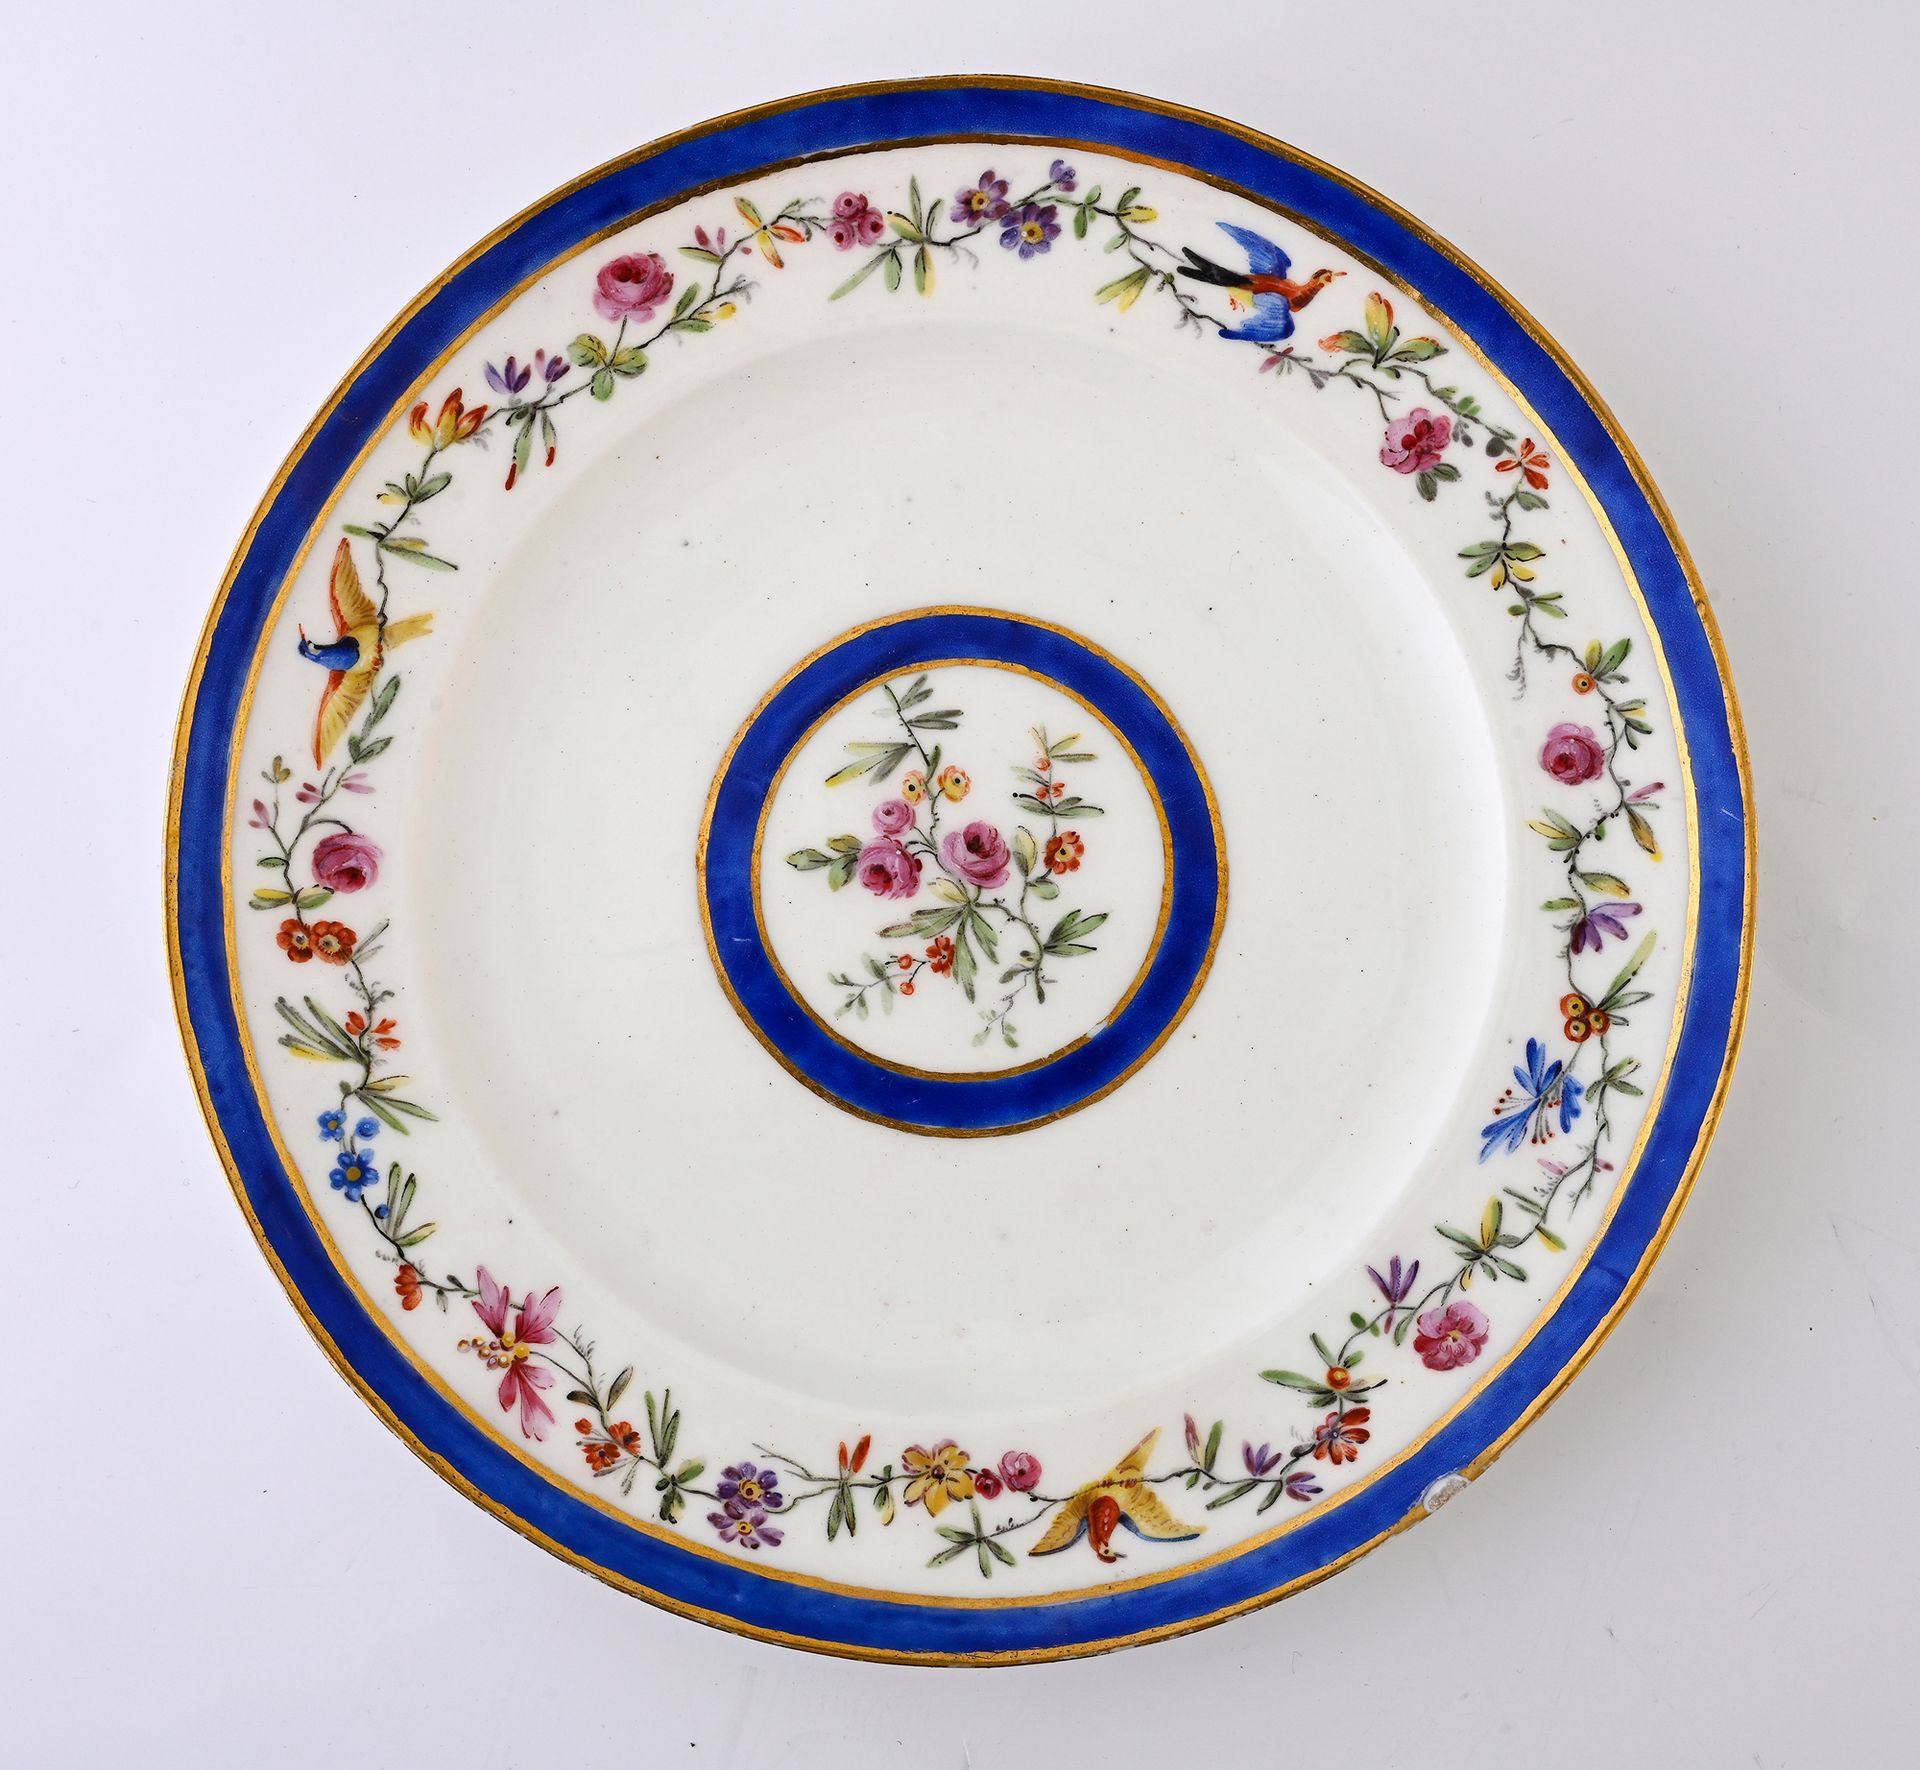 Null 18世纪末塞夫勒瓷器的 "普通 "盘子
塞夫勒蓝的标记，装饰者的标记为
Denis Levé和Chauvaux, the young
有多色和金色的装&hellip;